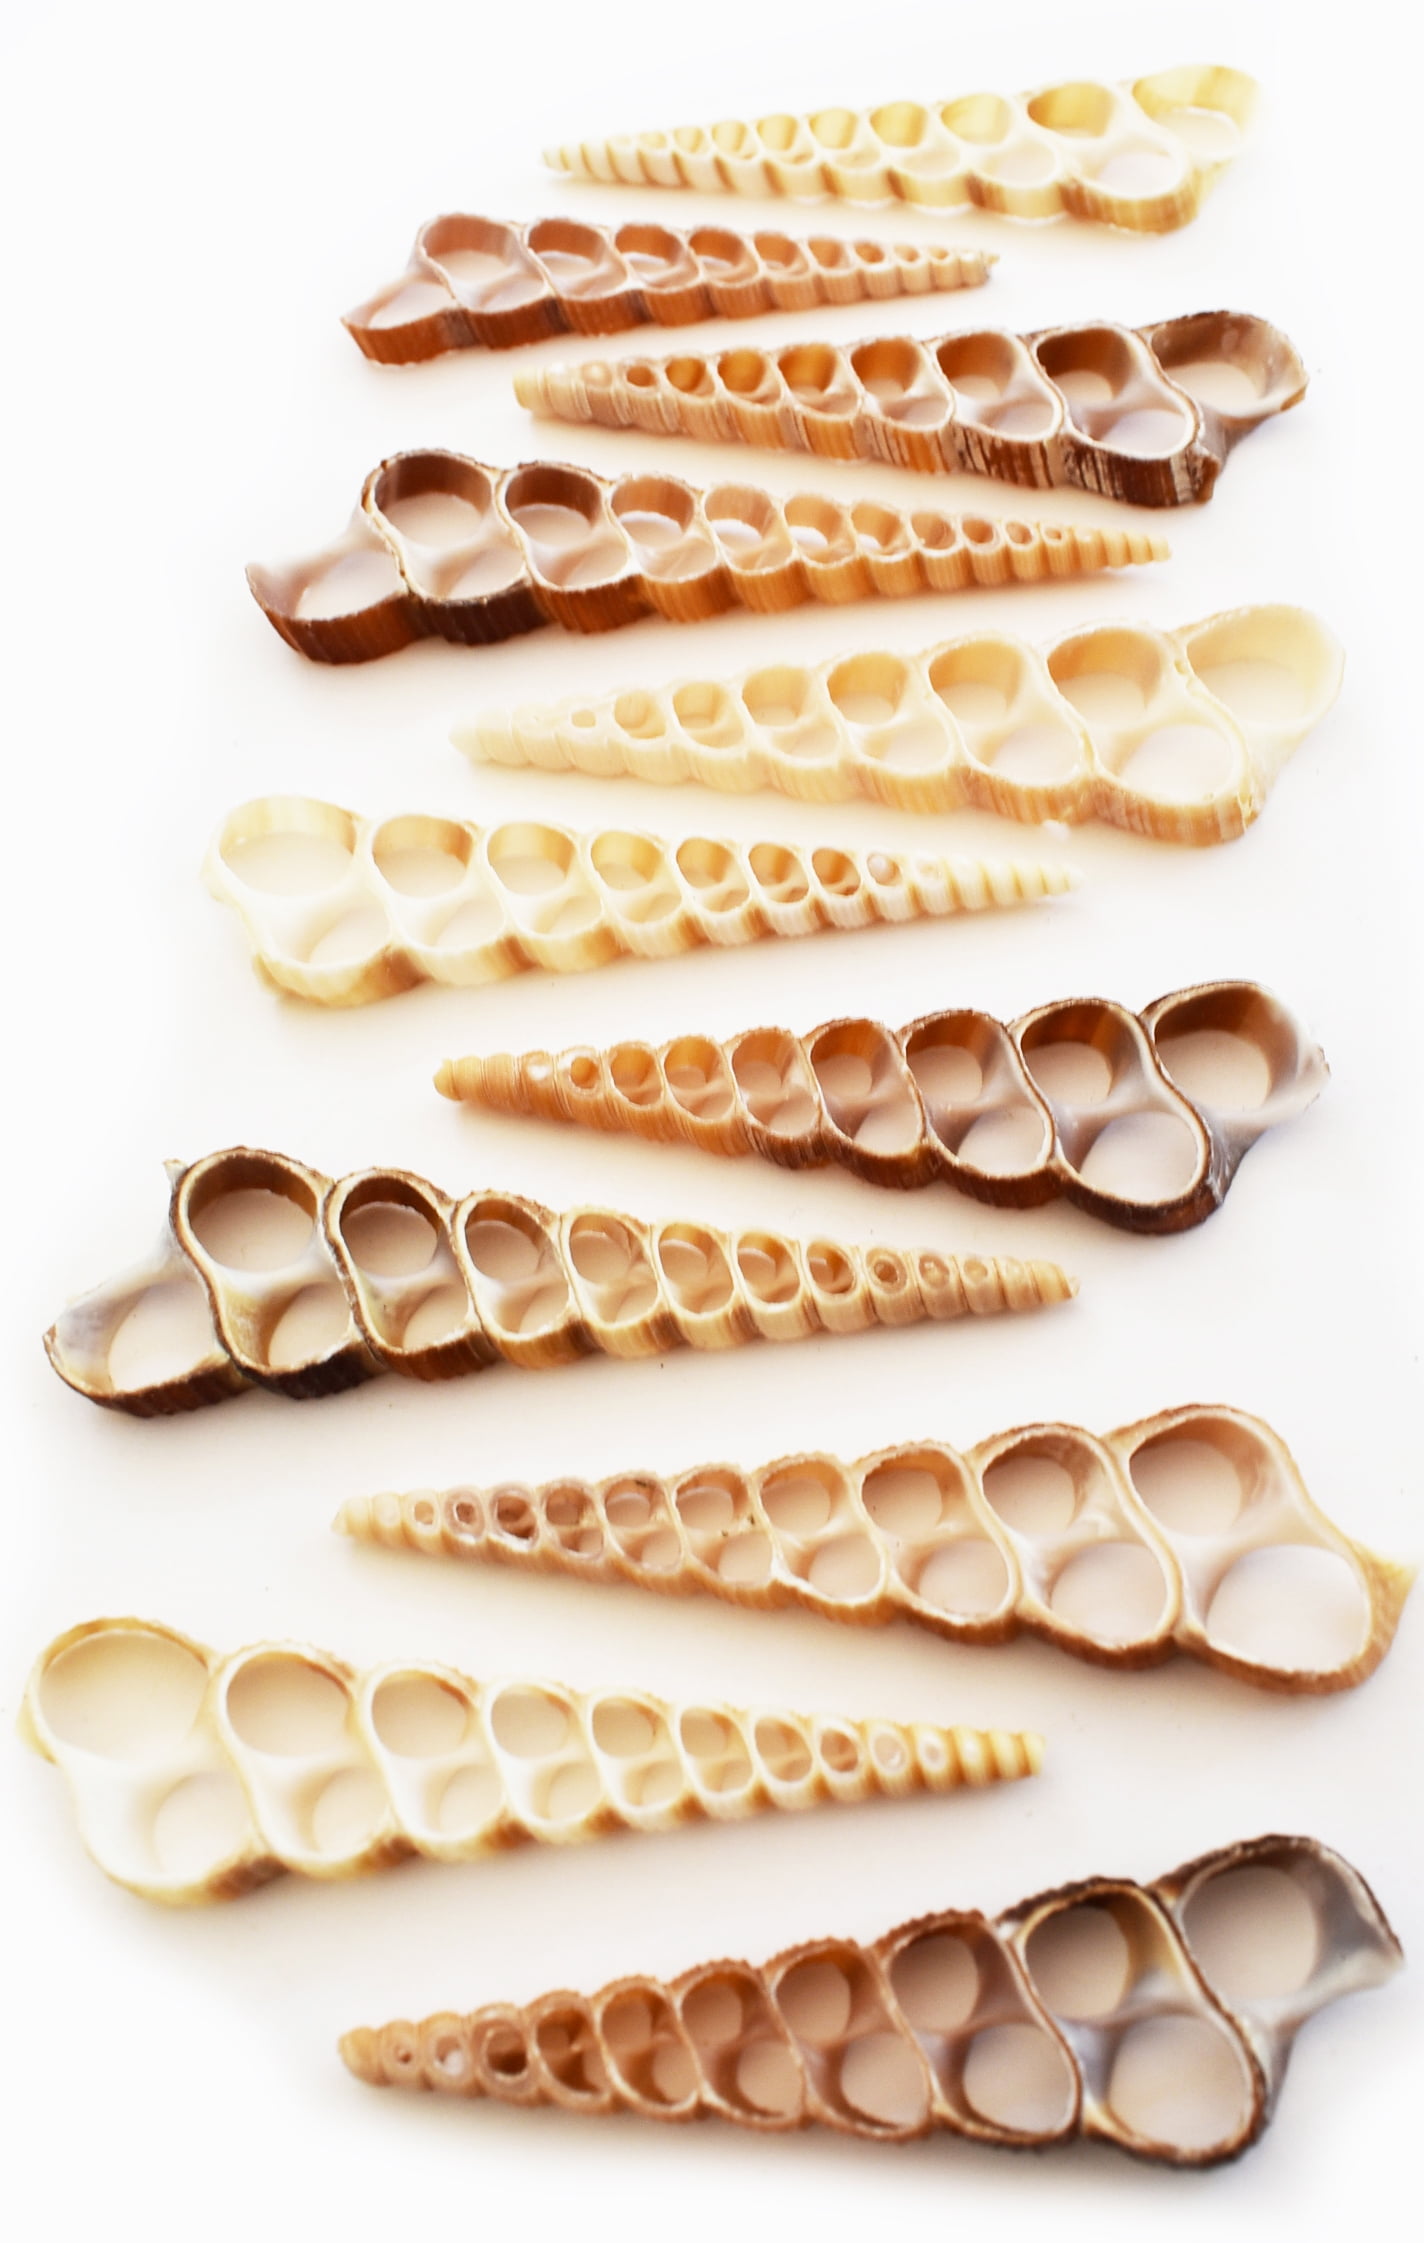 100 Center Cut Turretella Shells Crafts 2-3" Beach Nautical Seashell Ocean Art 